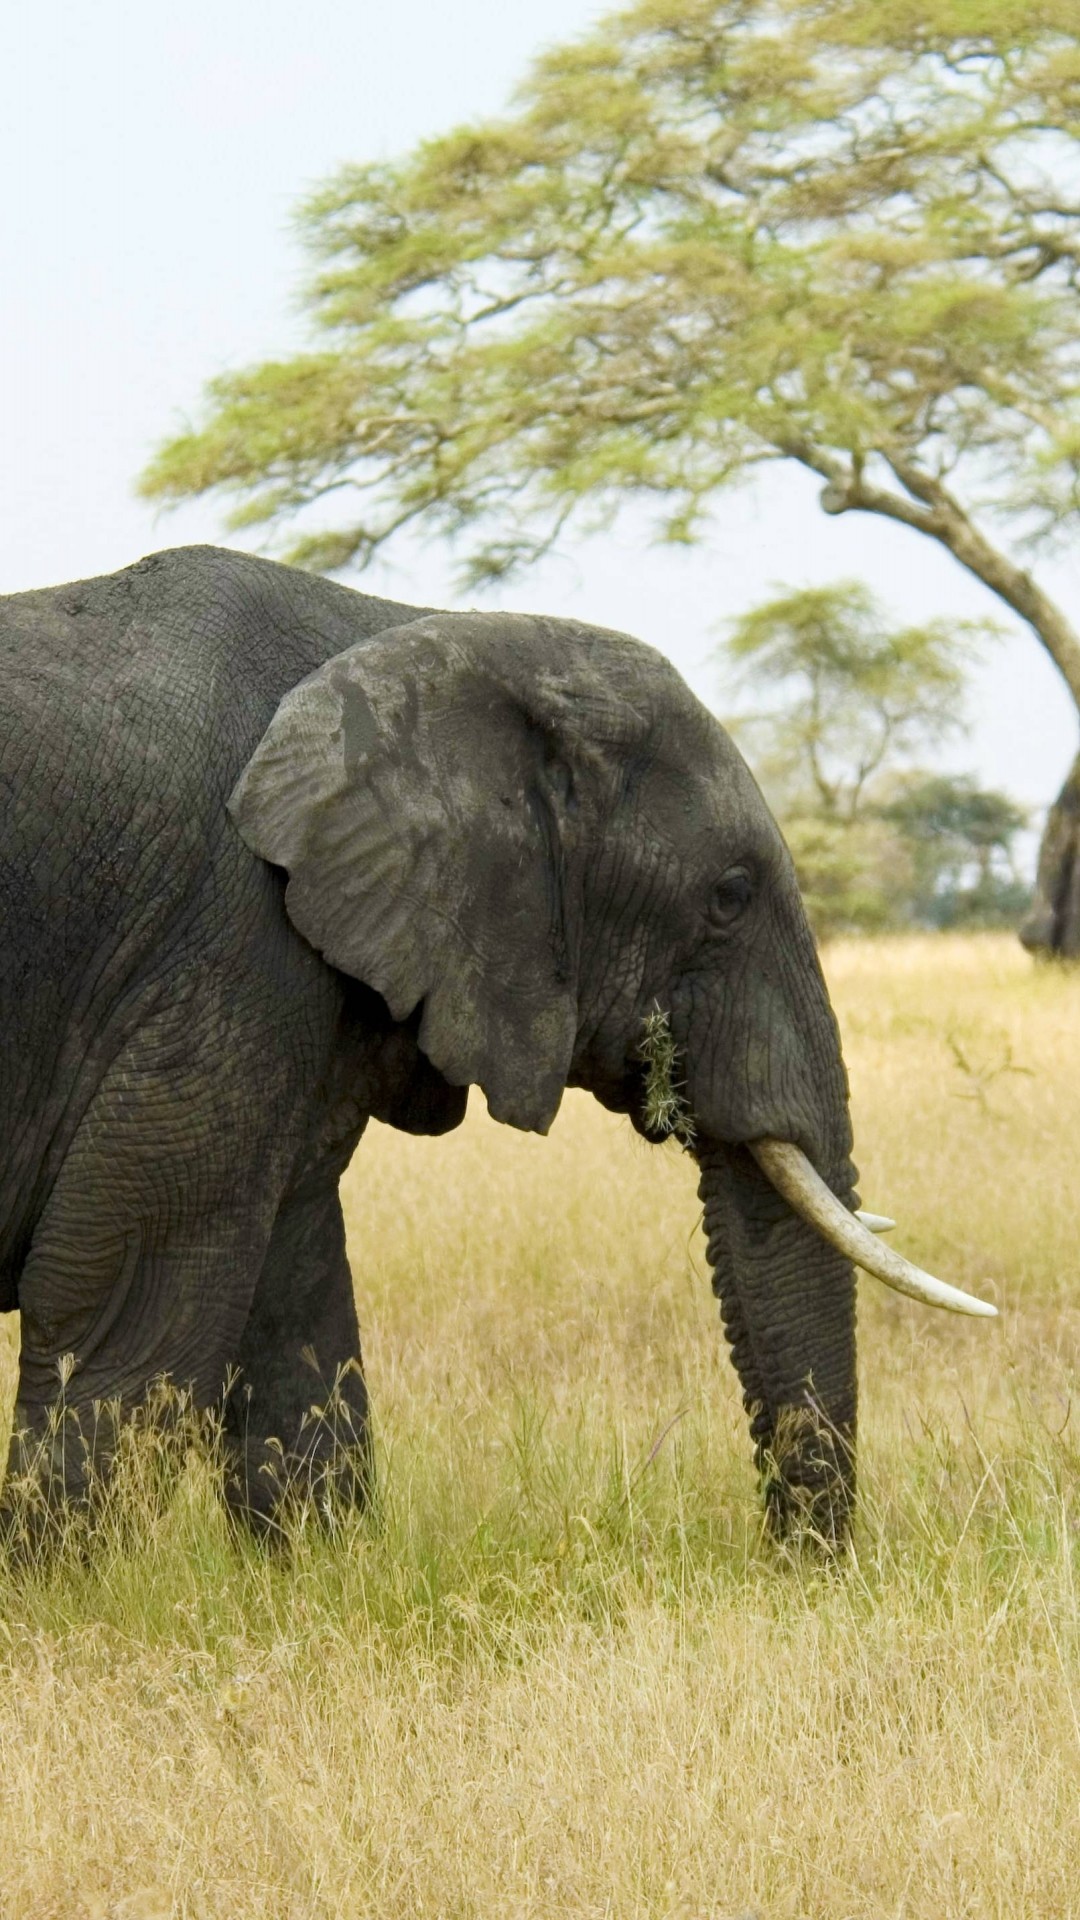 elefante fondo de pantalla para iphone,animal terrestre,elefante,elefantes y mamuts,fauna silvestre,elefante africano